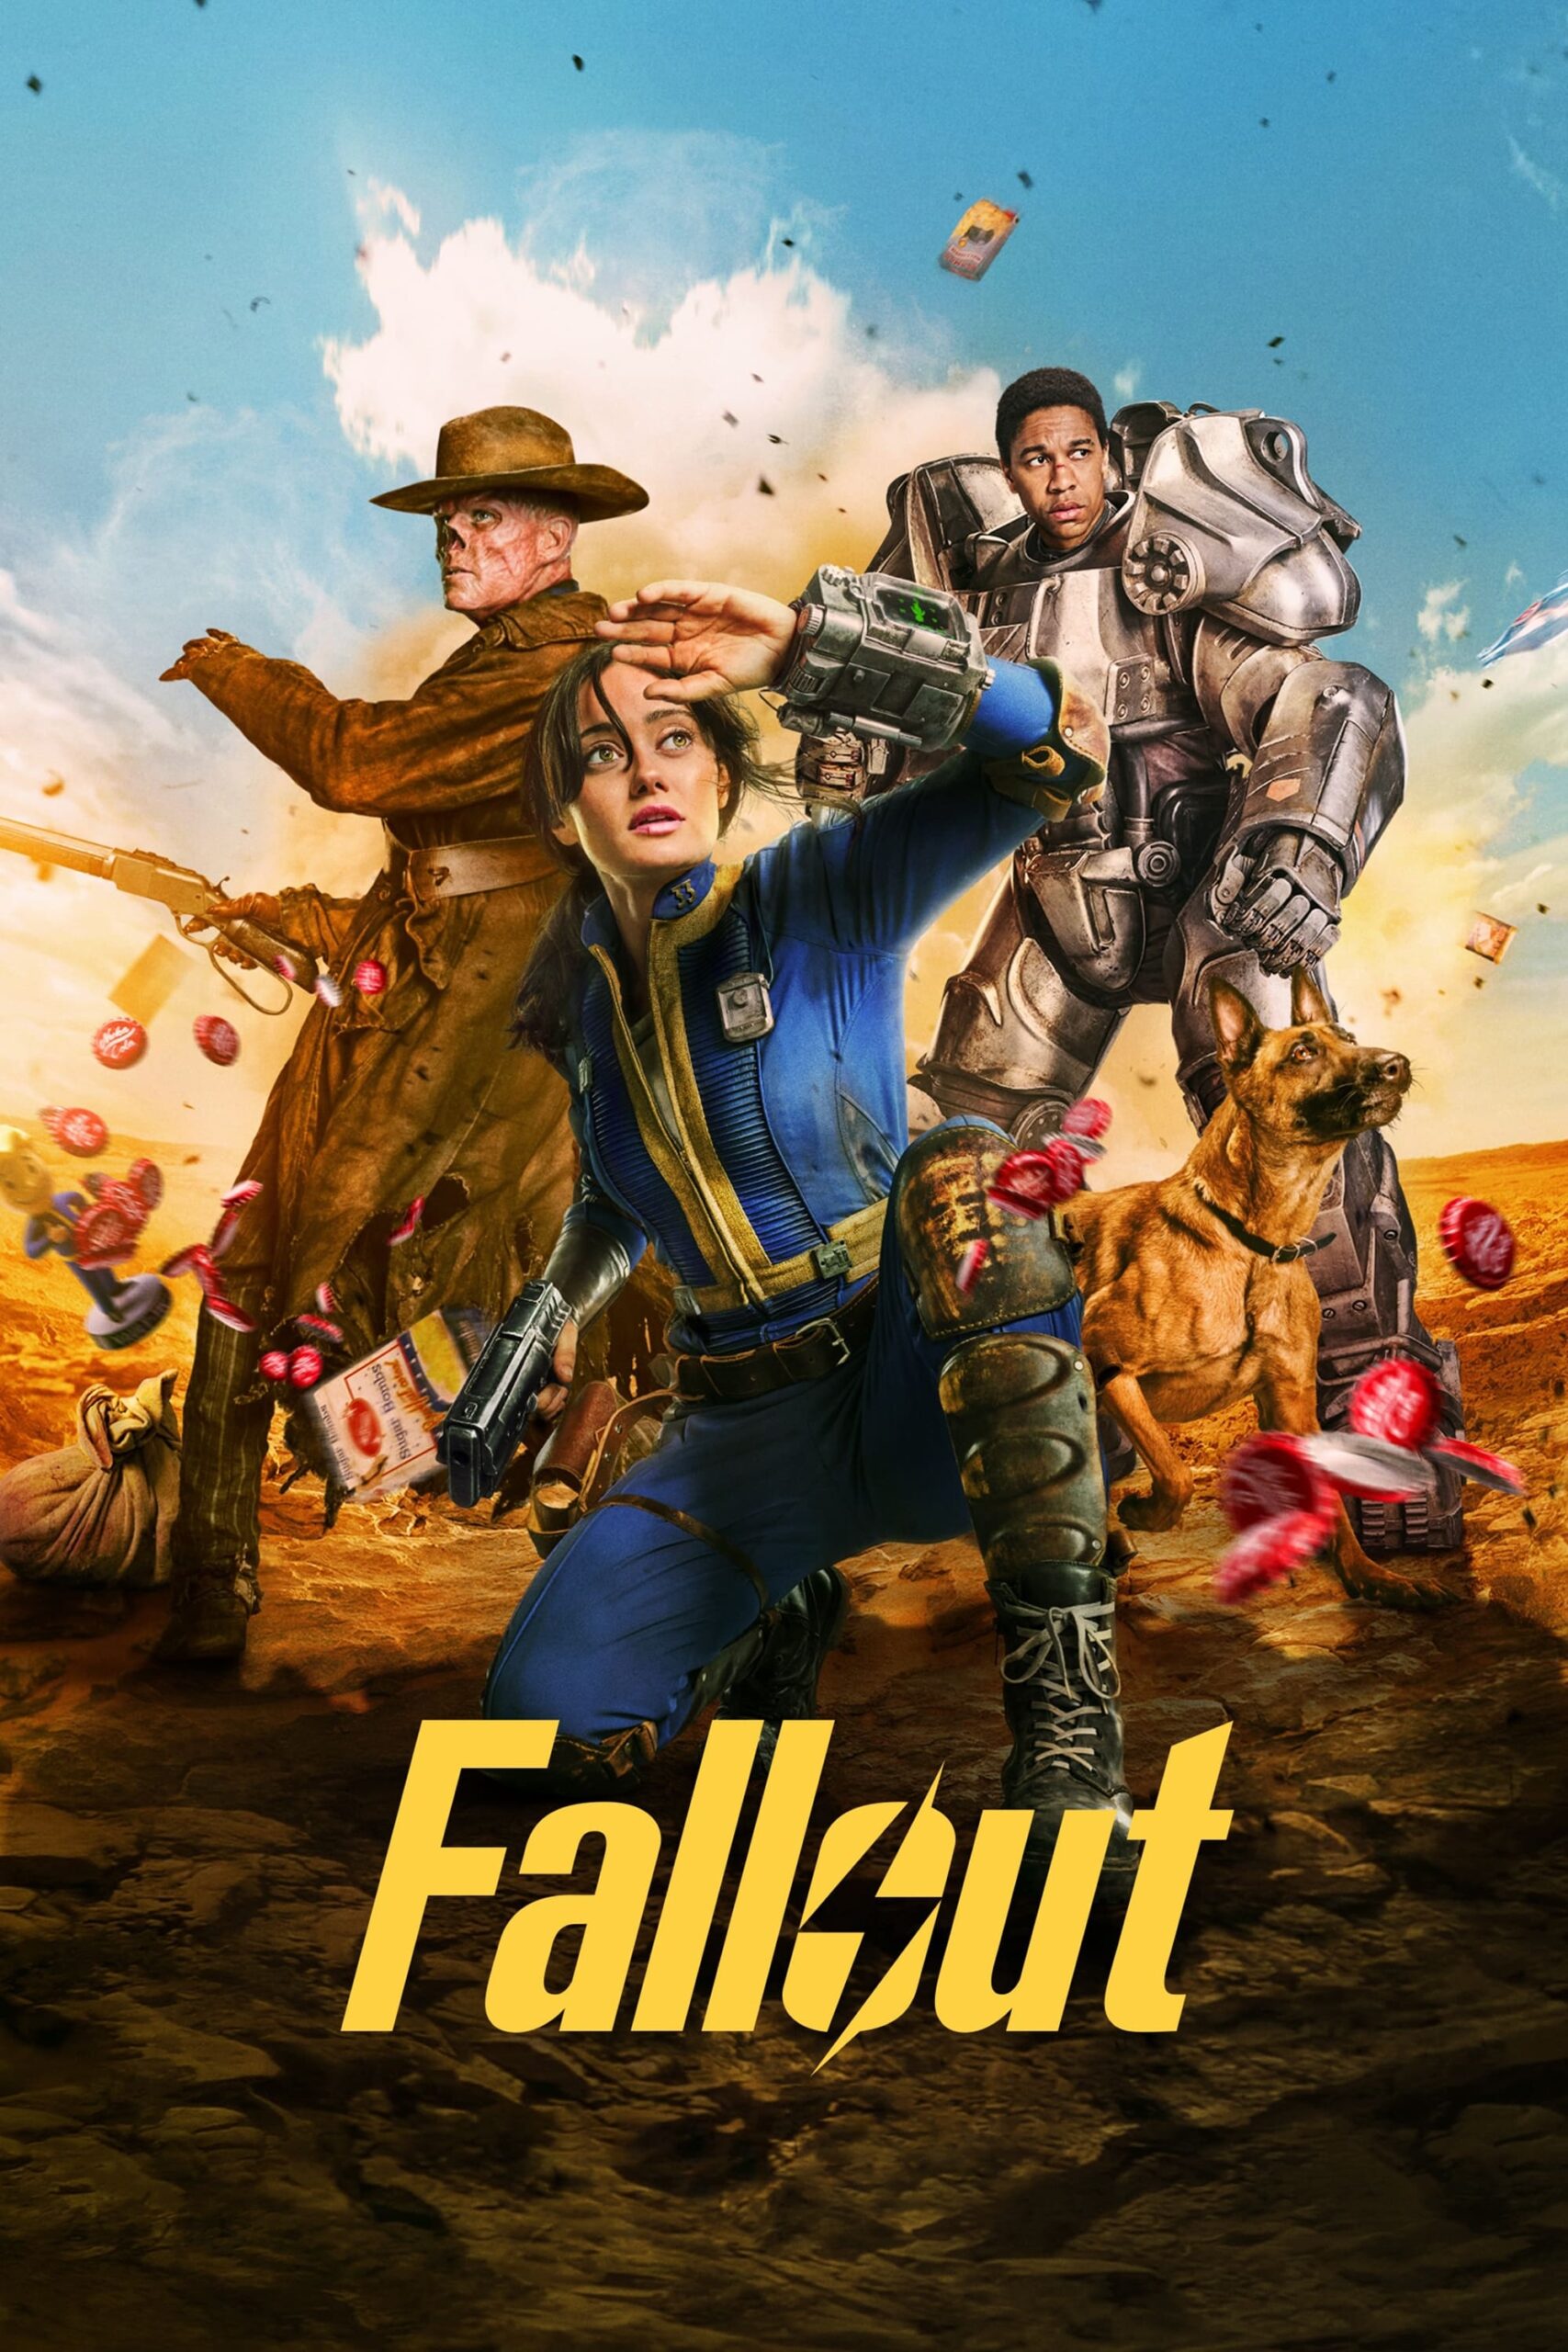 Plakát pro film “Fallout”